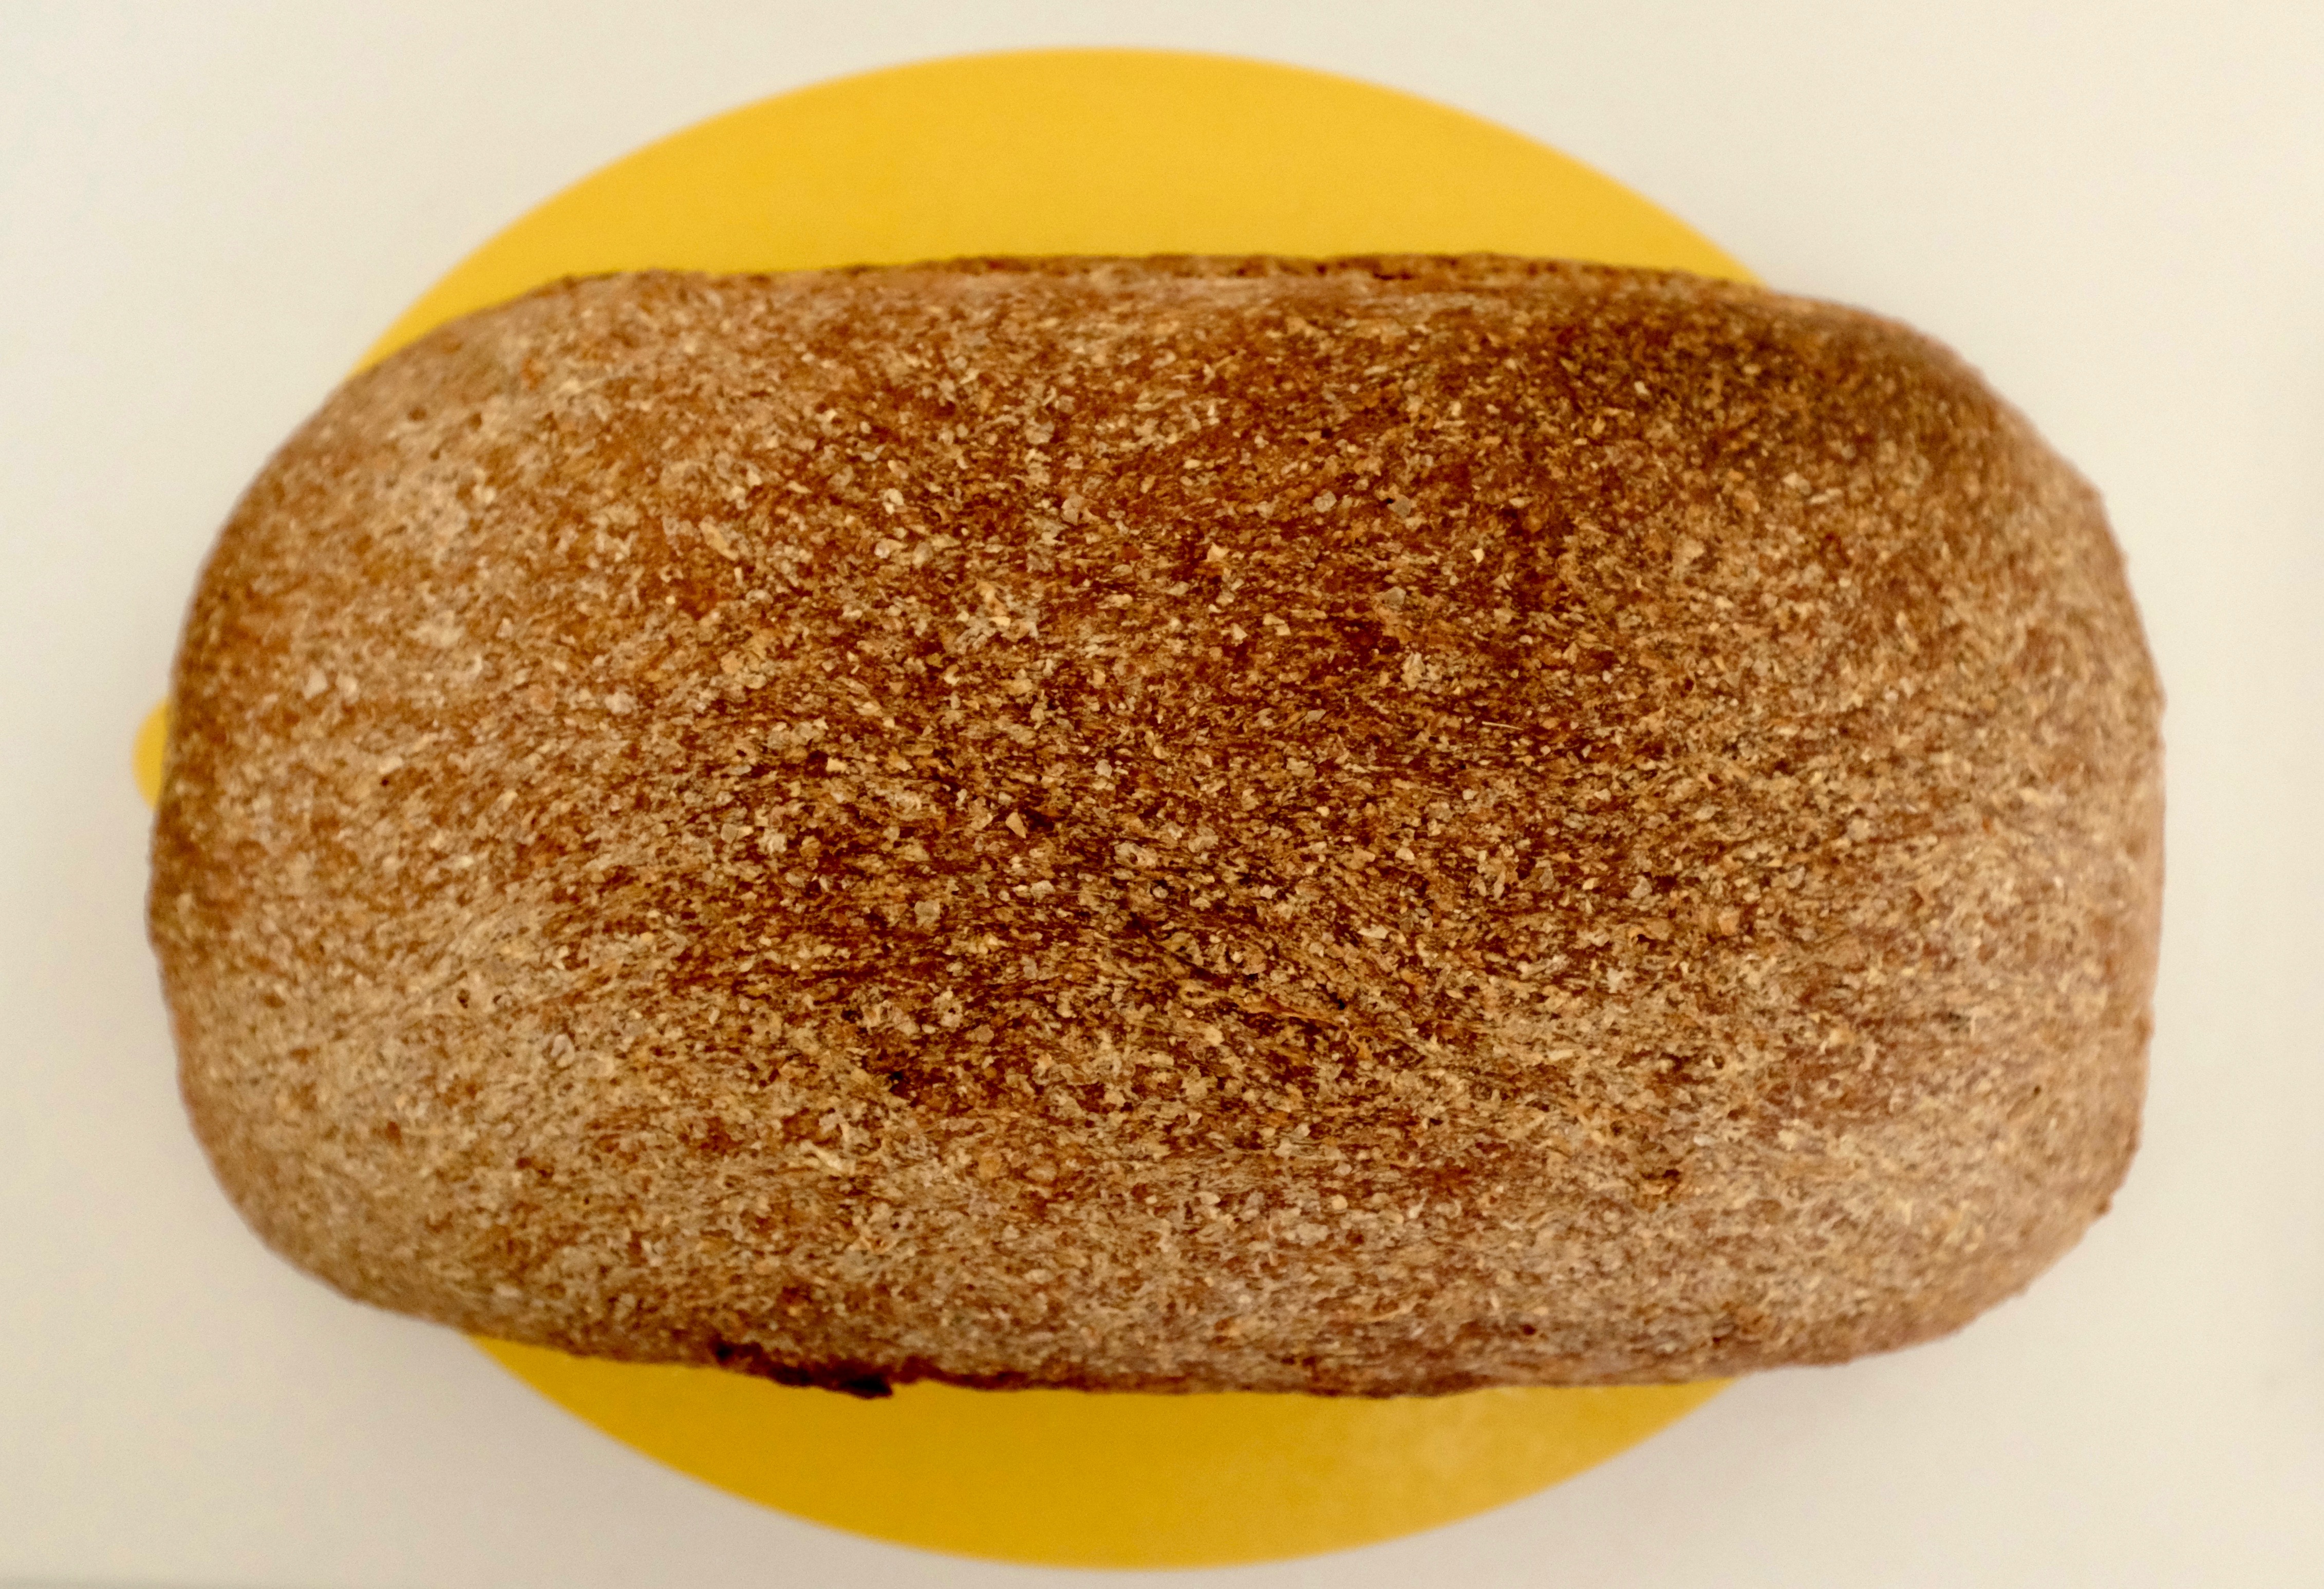 An image of a bread called “The brick (Hartog Volkoren)”